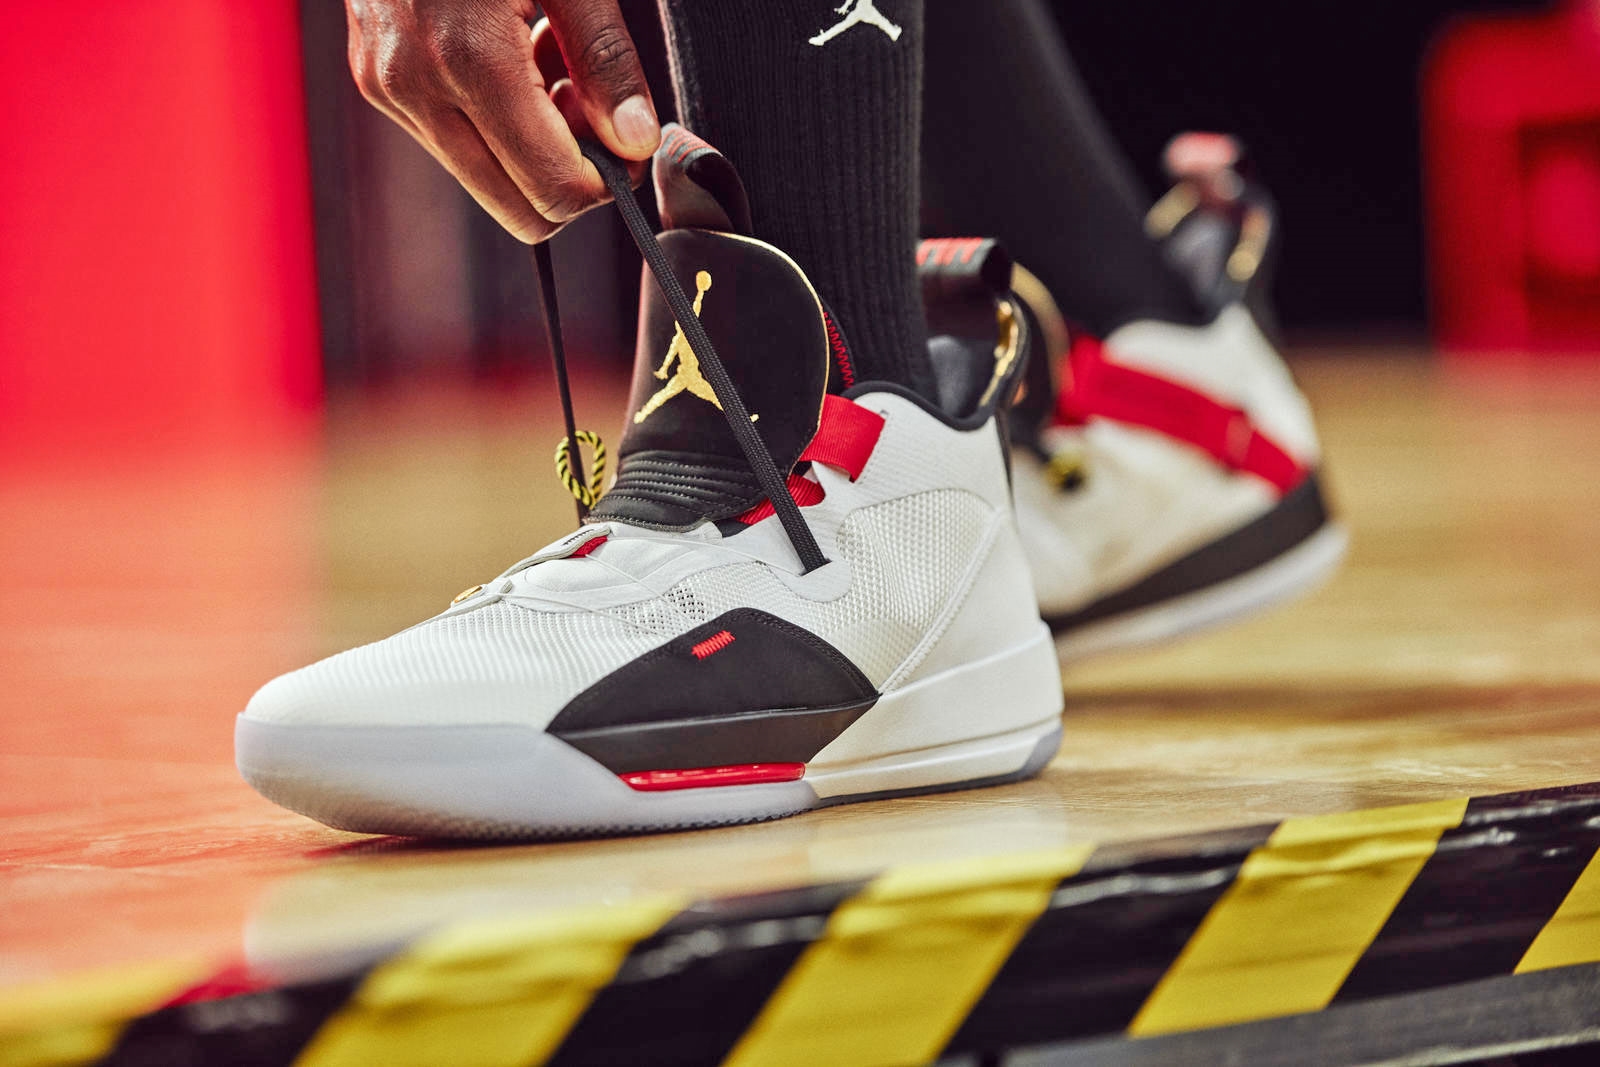 Jordan XXXIII adds lacing tech 'informed' by Nike's HyperAdapt | DeviceDaily.com